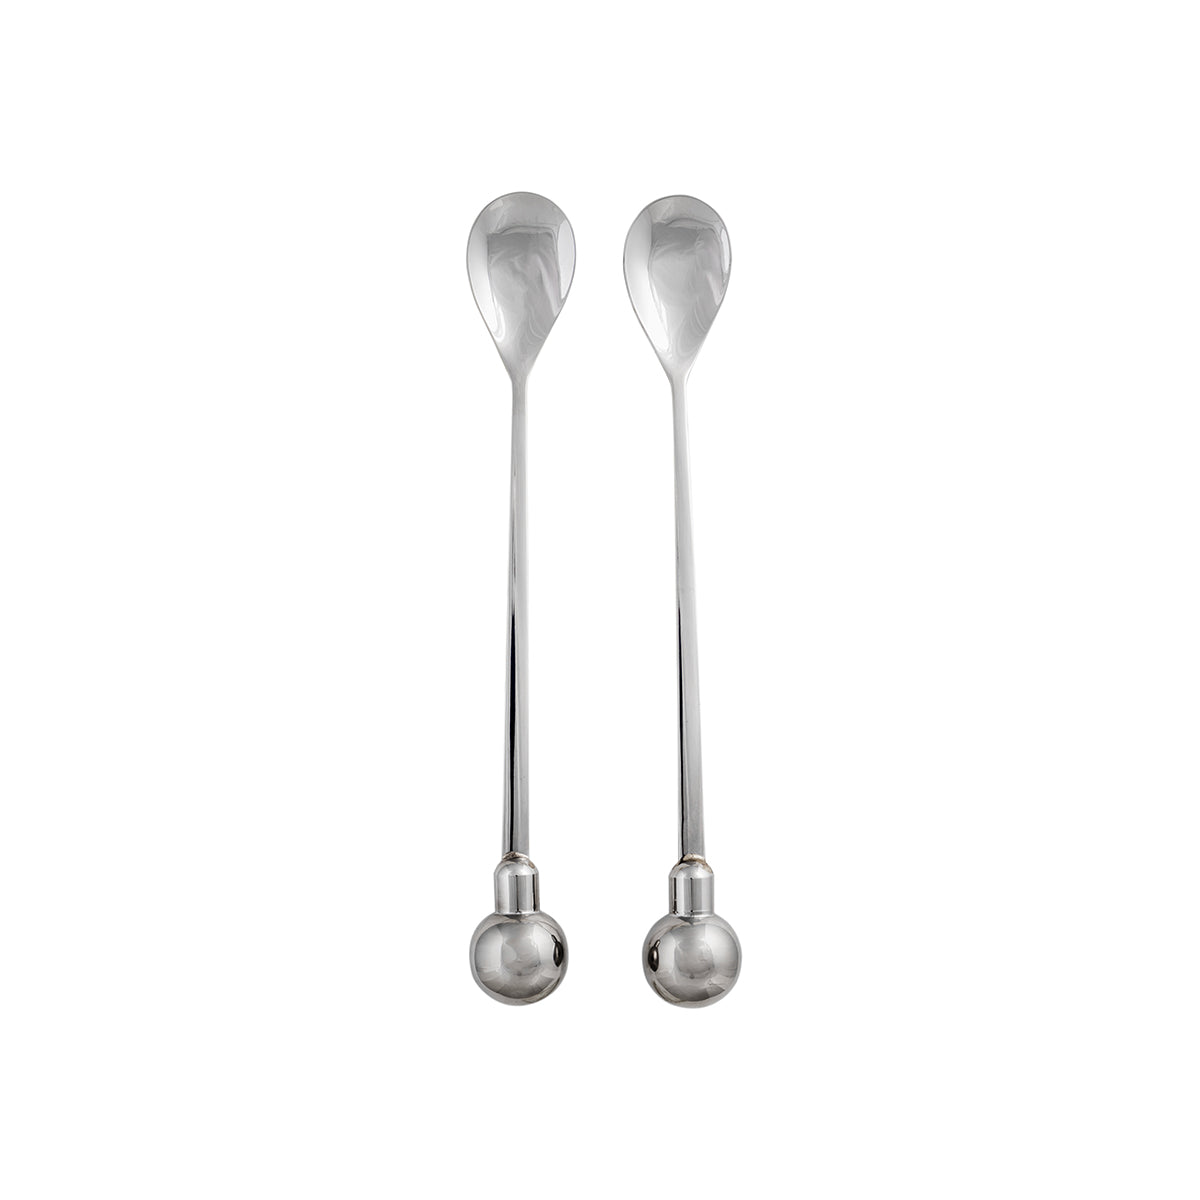 Puisto spoon set, steel